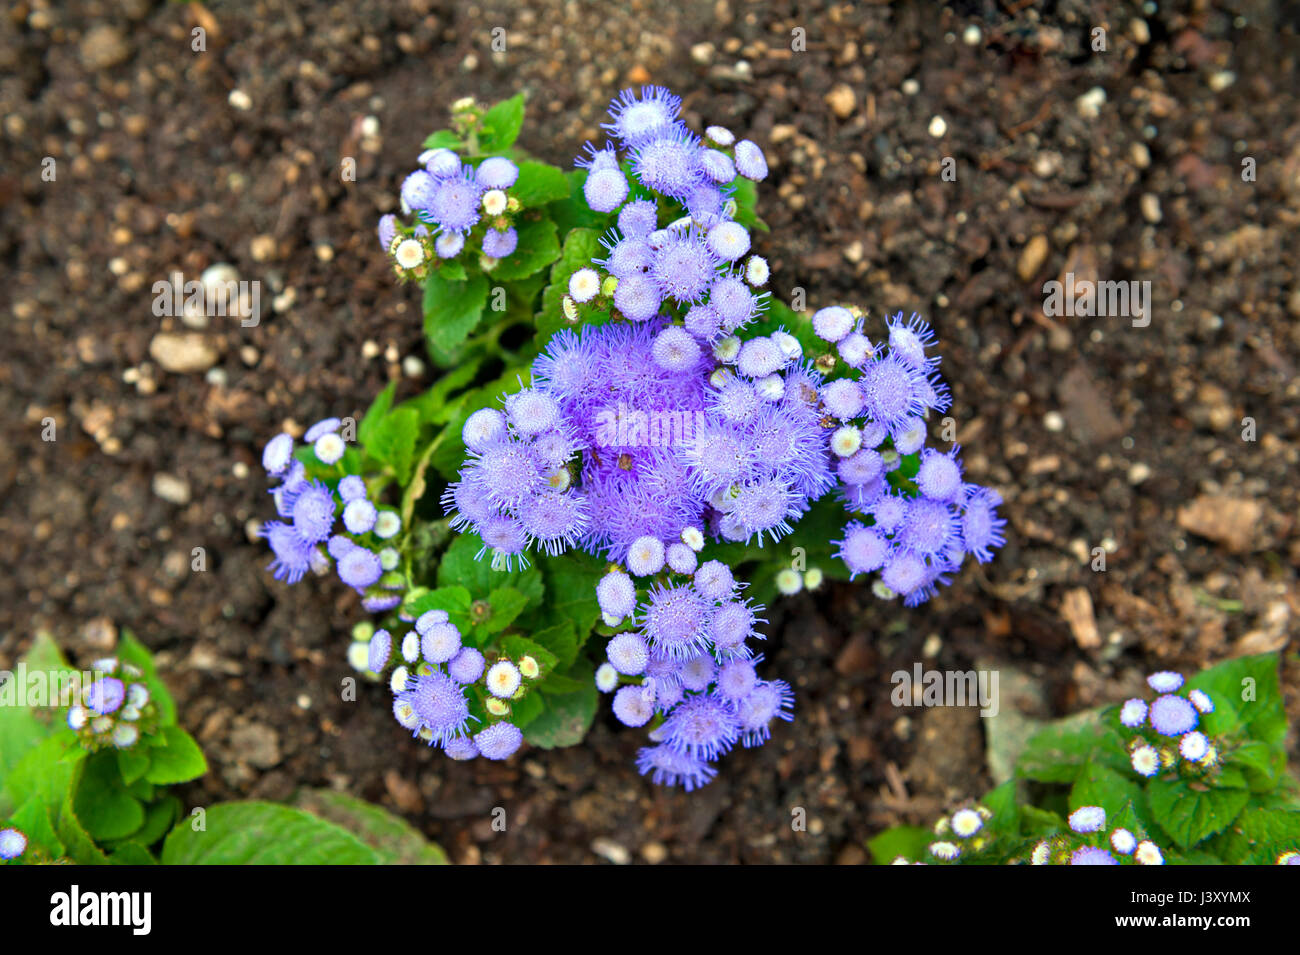 Blue mistflower (Conoclinium coelestinum) or purple blue Ageratum flower plant growing on ground Stock Photo